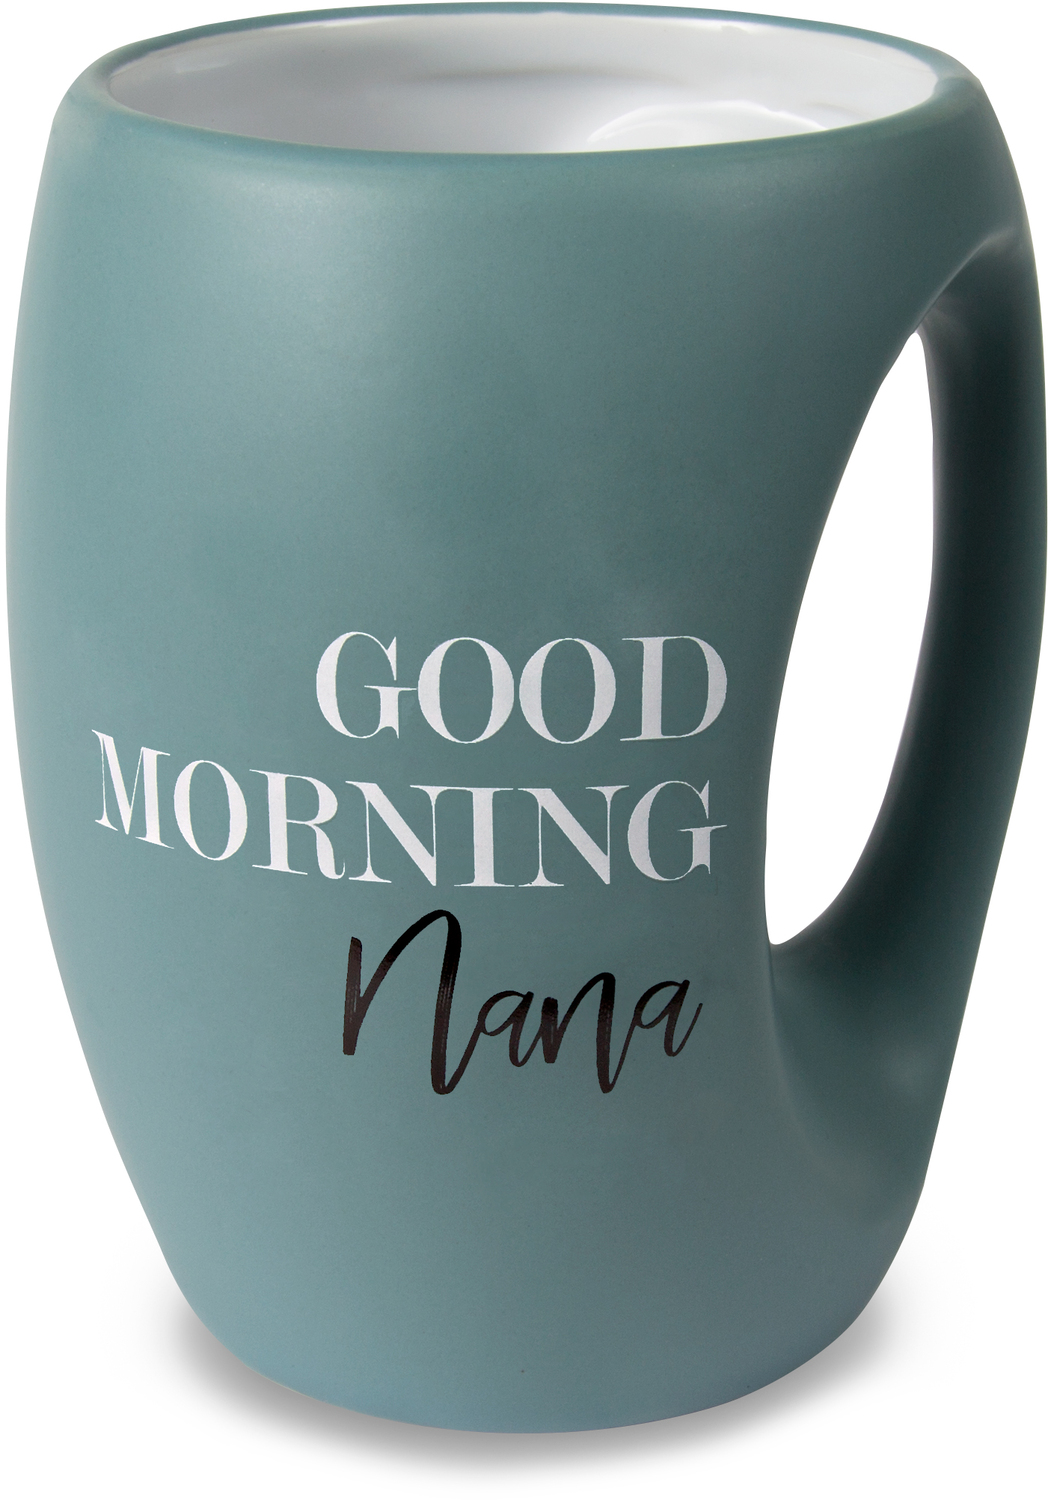 Nana by Good Morning - Nana - 16 oz Cup